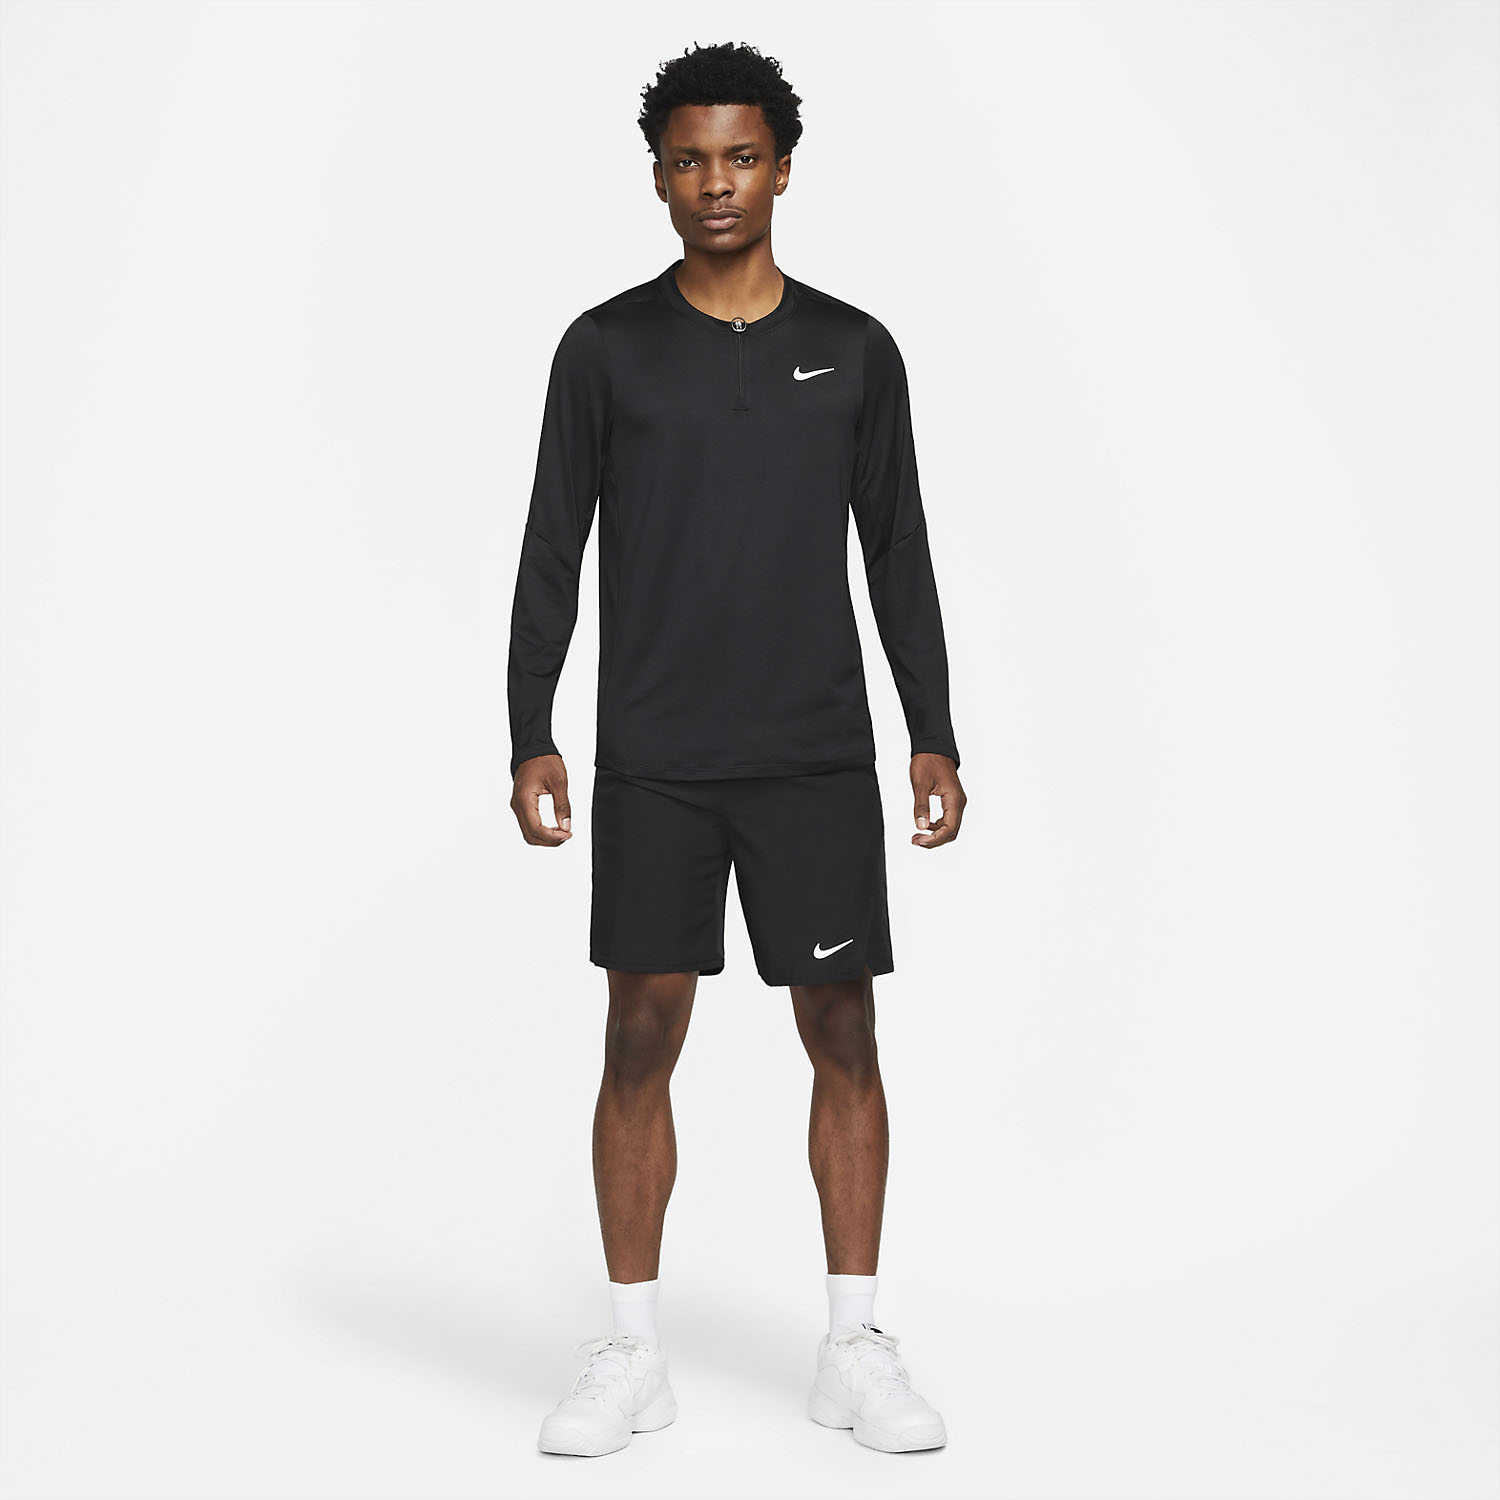 Nike Dri-FIT Advantage Men's Tennis Shirt - Black/White